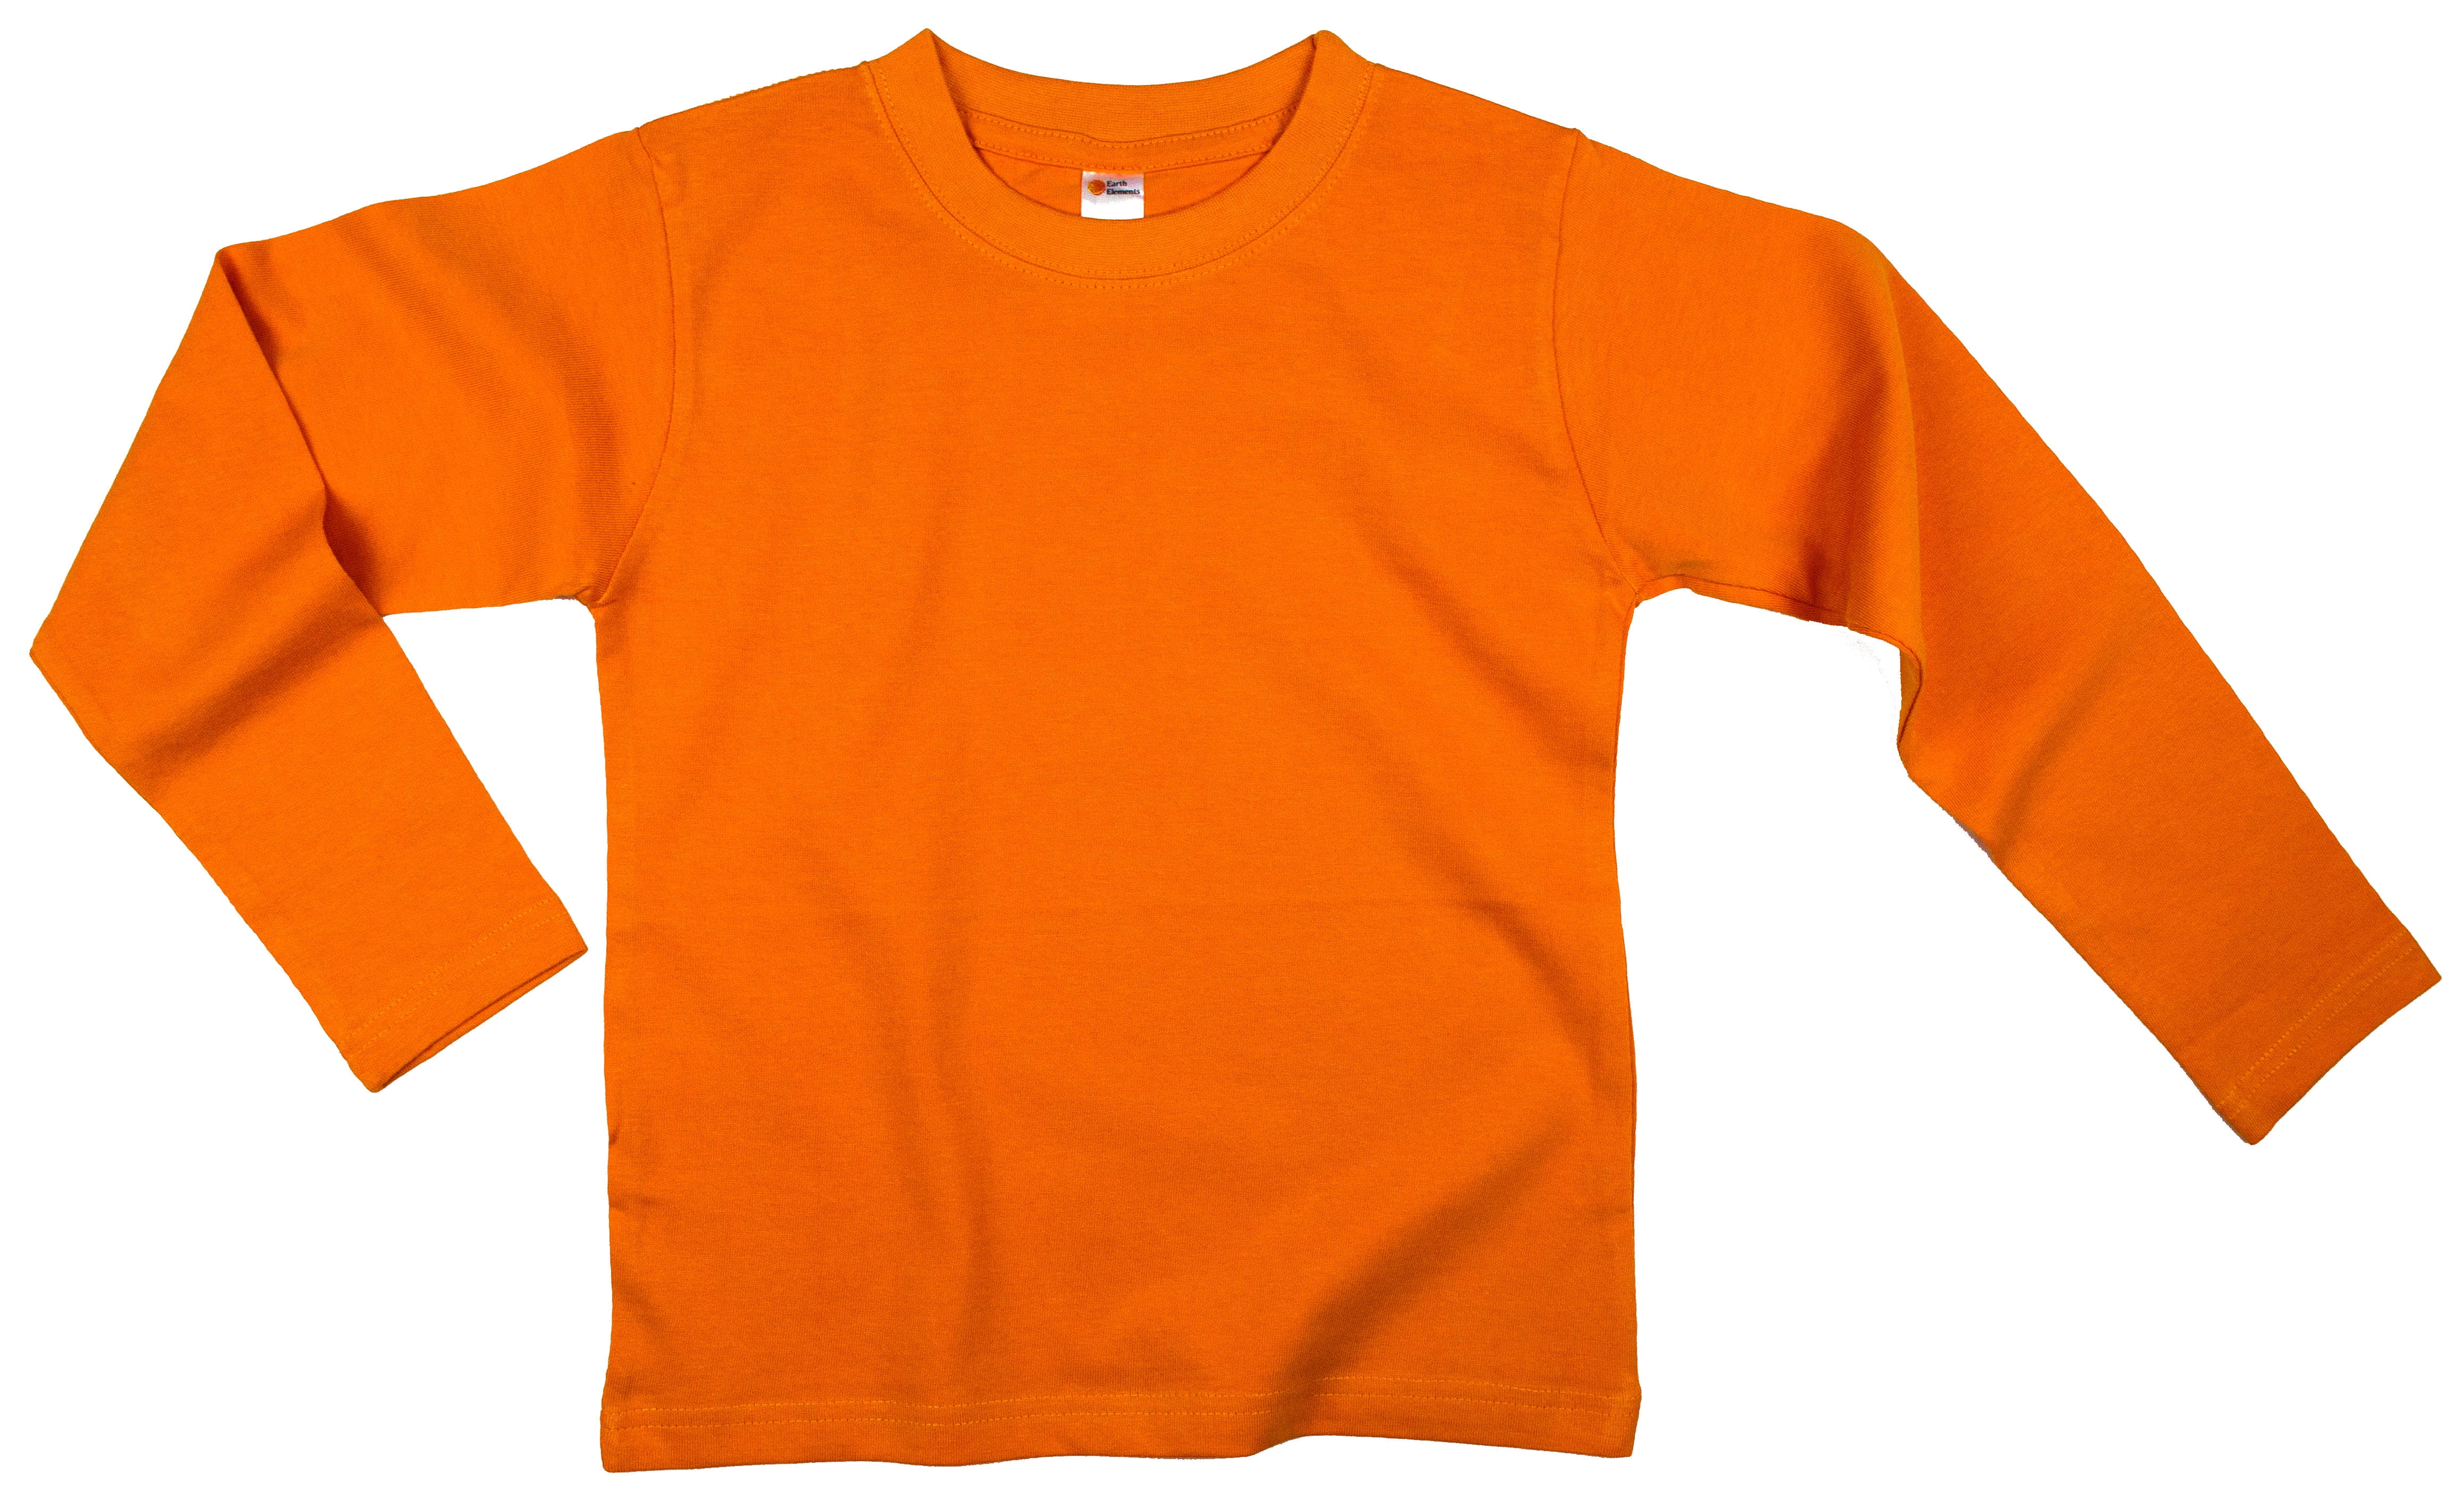 Buy > orange long sleeve top > in stock